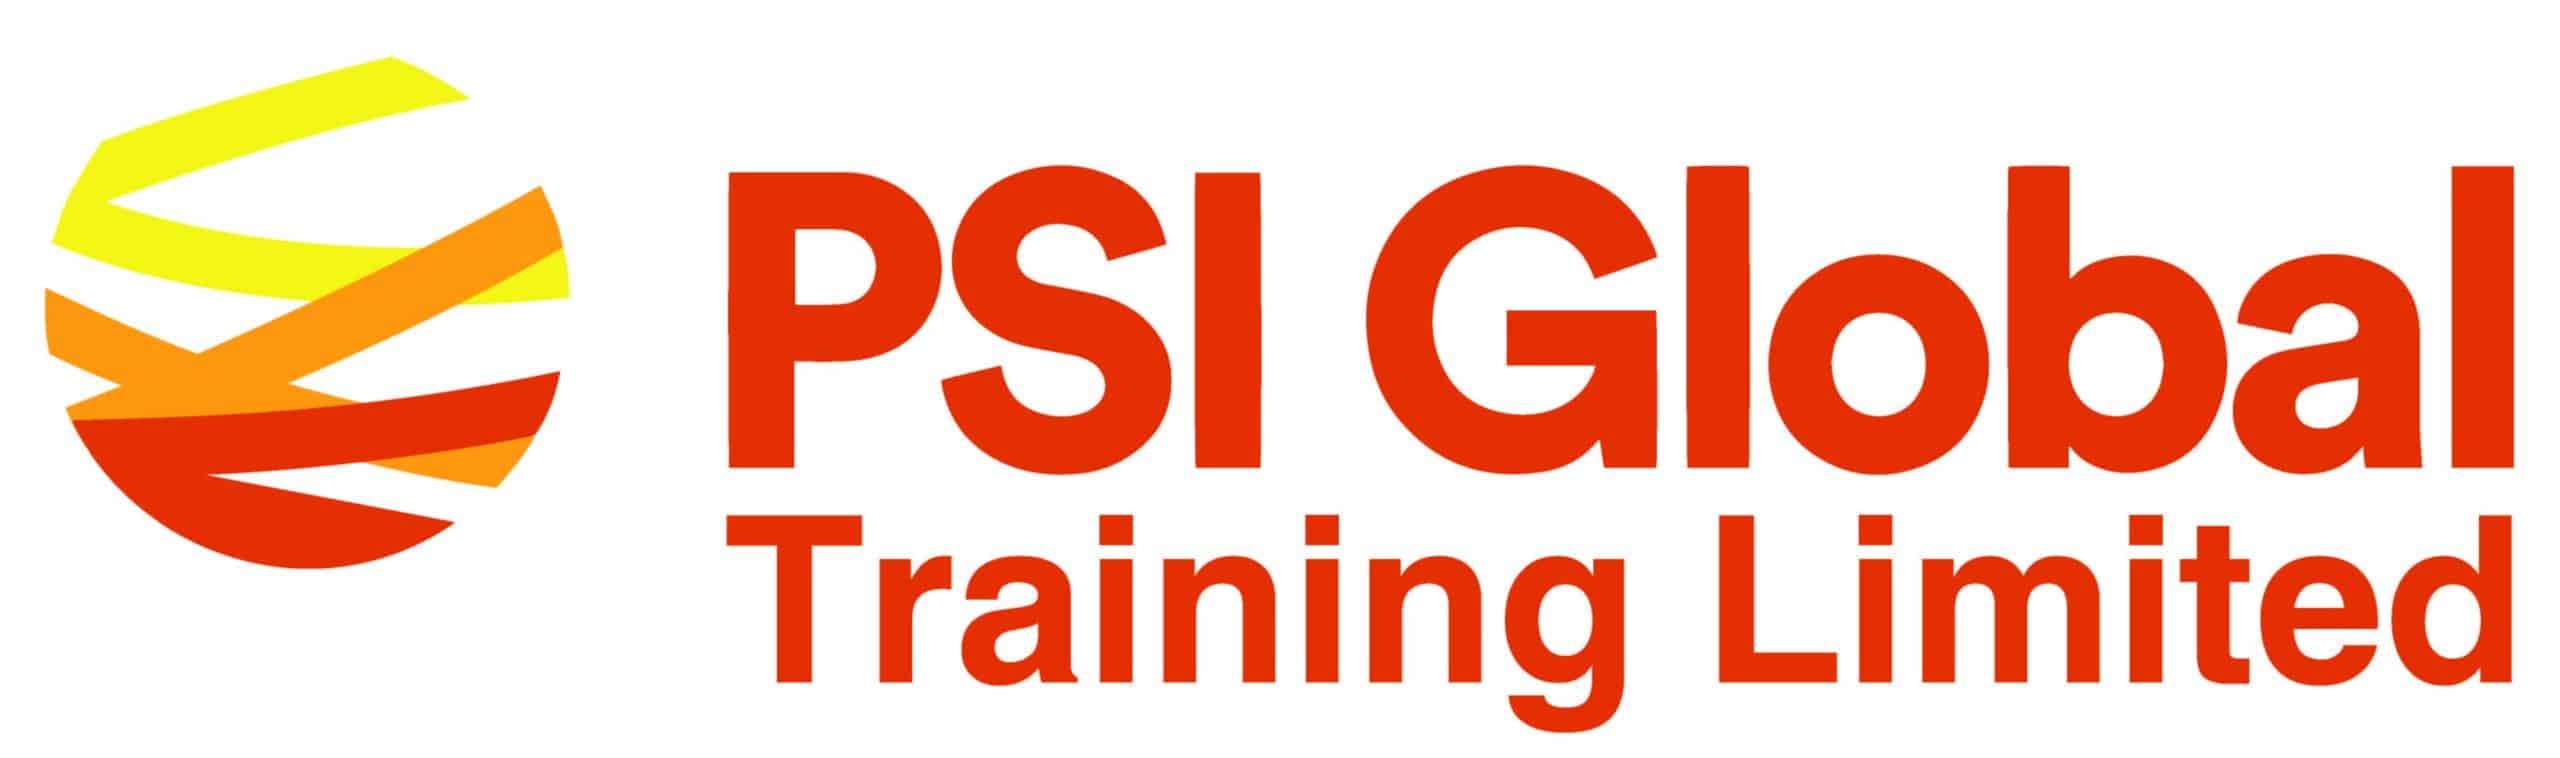 PSI Global Training